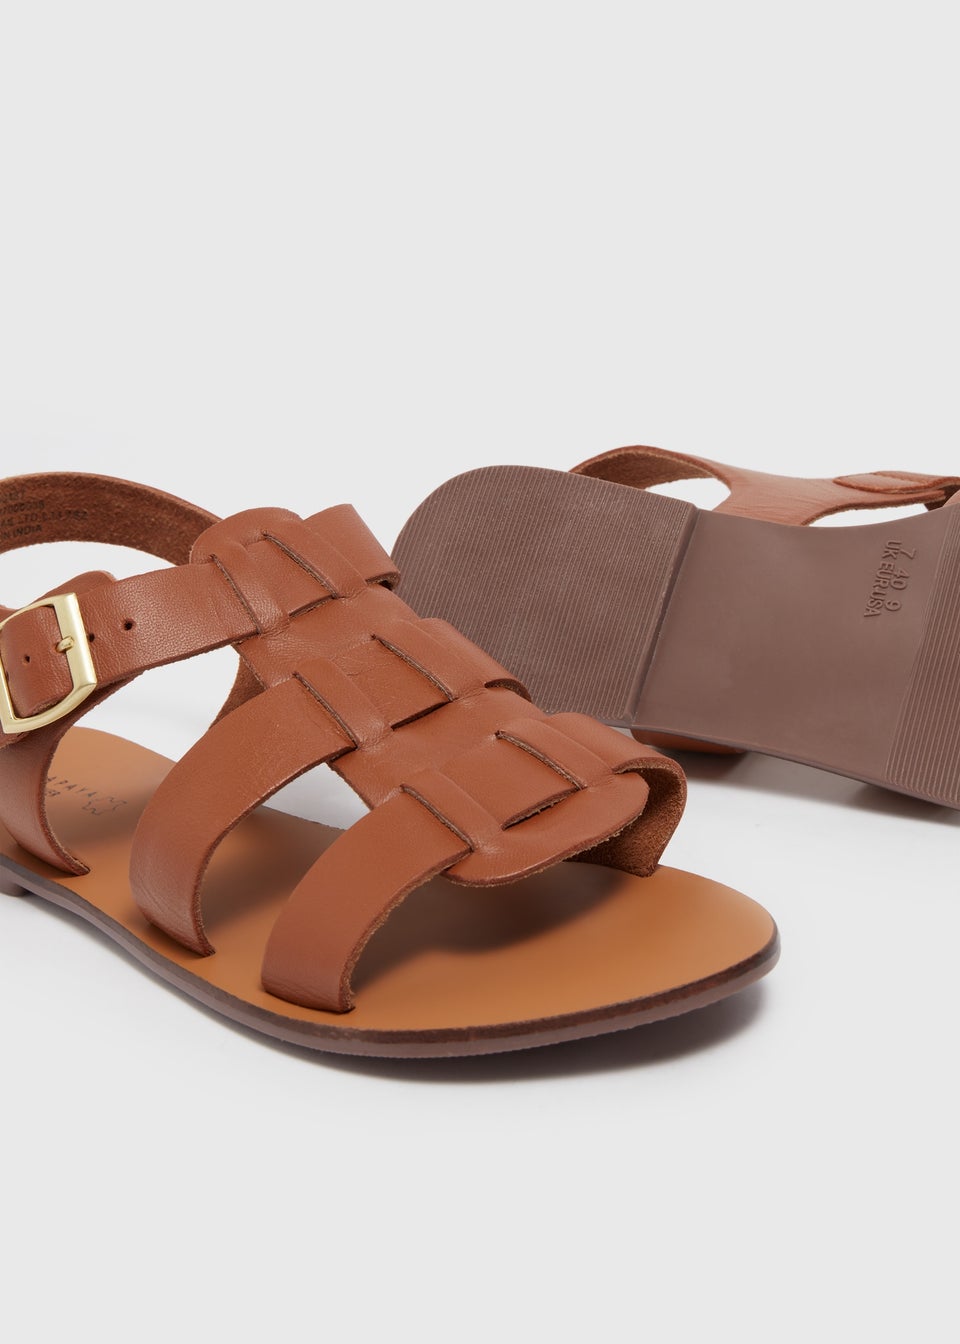 Tan Gladiator Leather Sandals